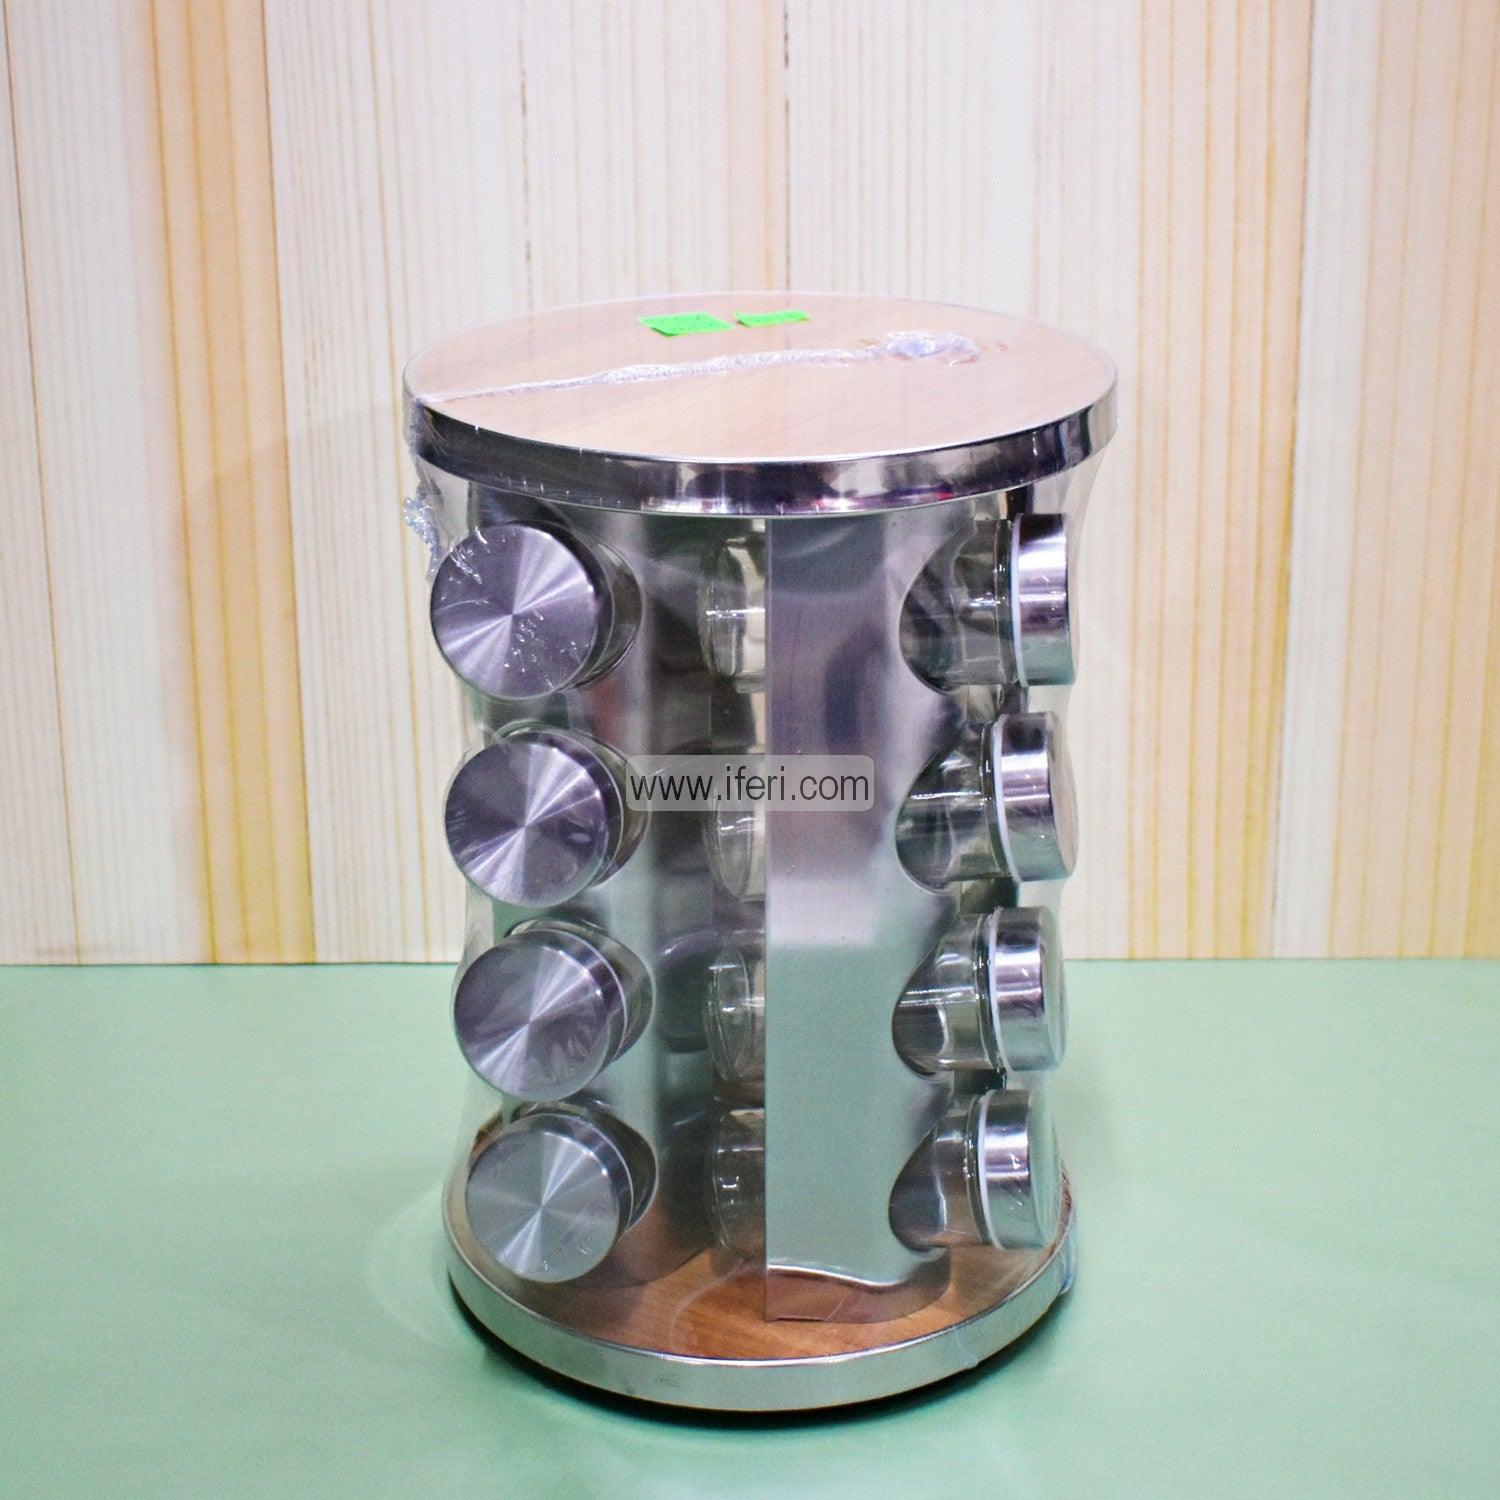 16 Pcs Spice Jar Set with Revolving Stand FH0767 Price in Bangladesh - iferi.com